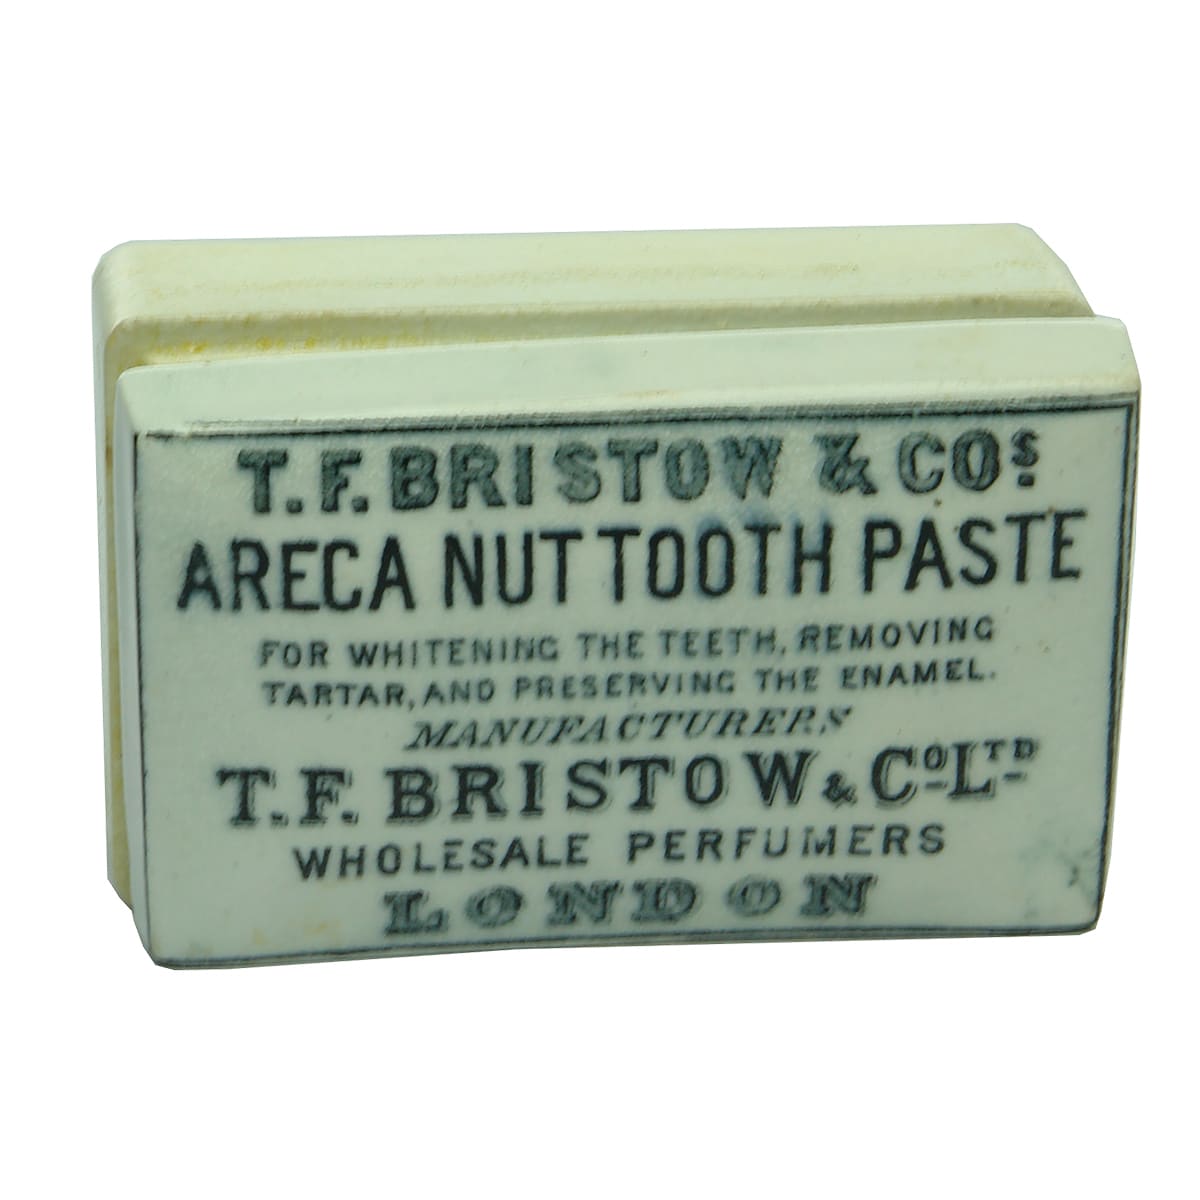 Pot Lid. Bristow, London. Areca Nut Tooth Paste. Rectangular. Black & White.